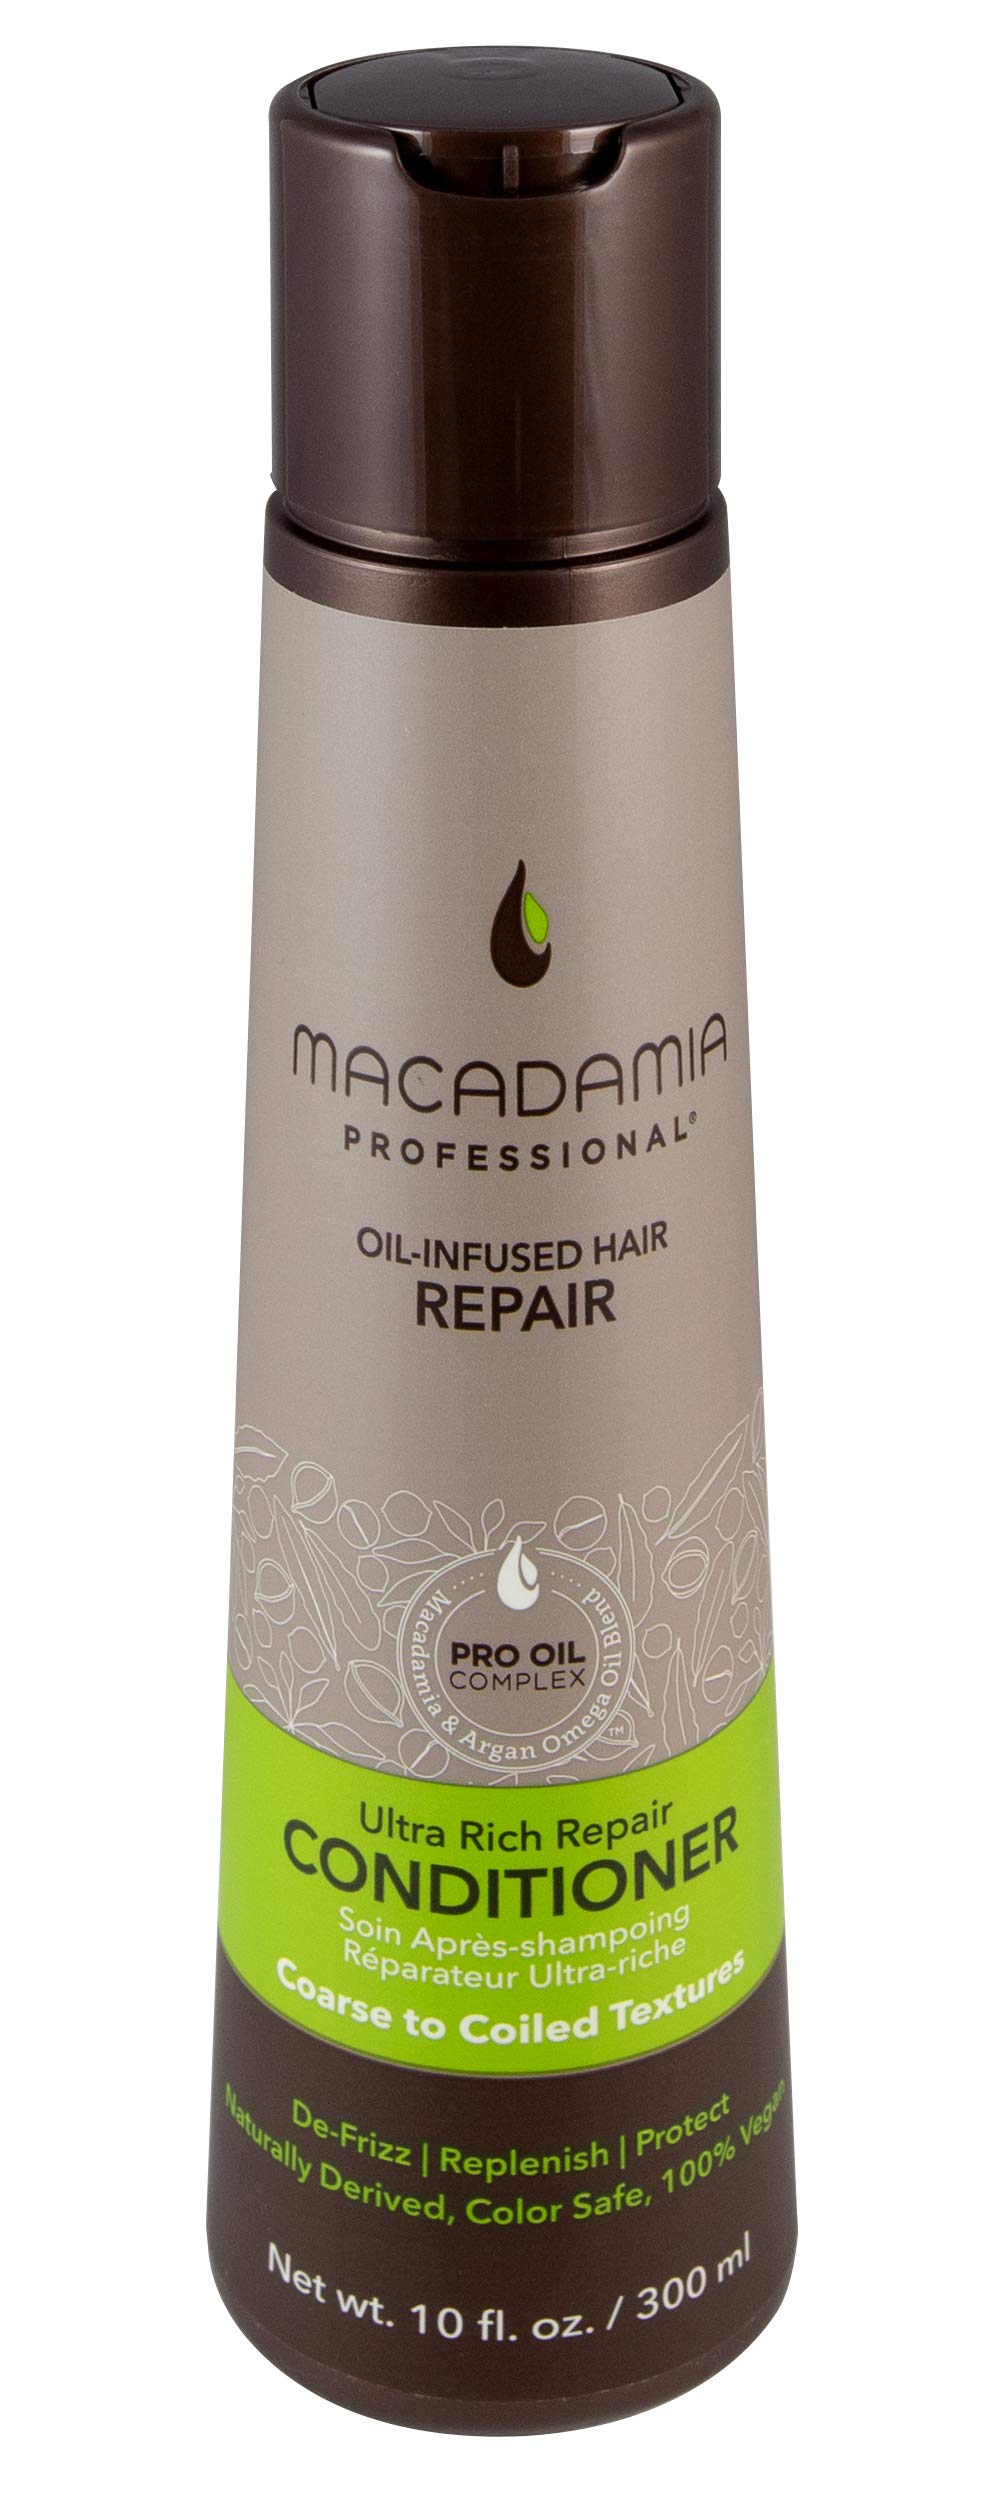 Macadamia Professional Hair Care Sulfate & Paraben Free Natural Organic Cruelty, Regular, 10 Oz